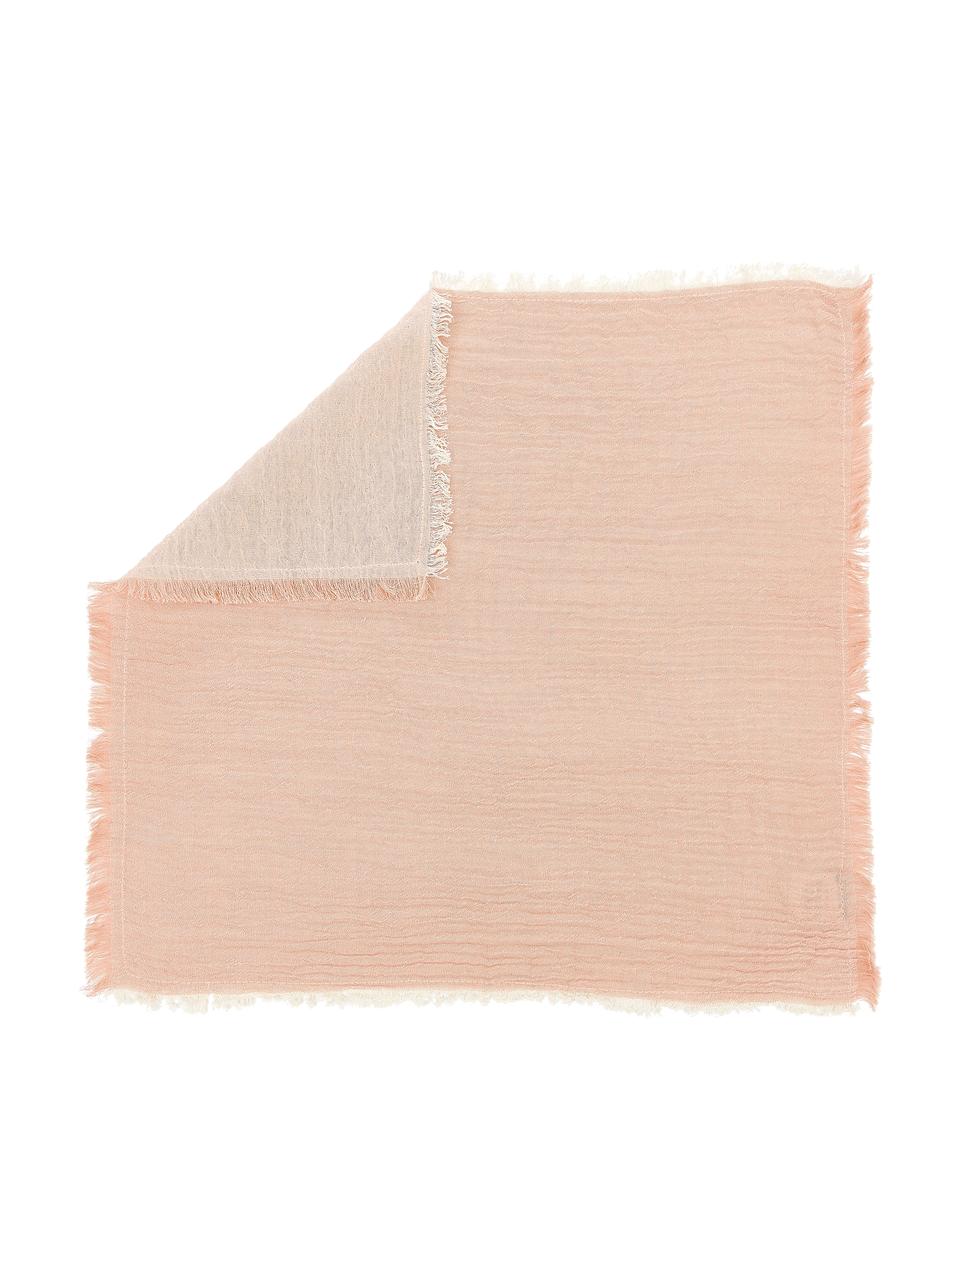 Stoff-Servietten Layer in Rosa, 4 Stück, 100% Baumwolle, Rosa, B 45 x L 45 cm